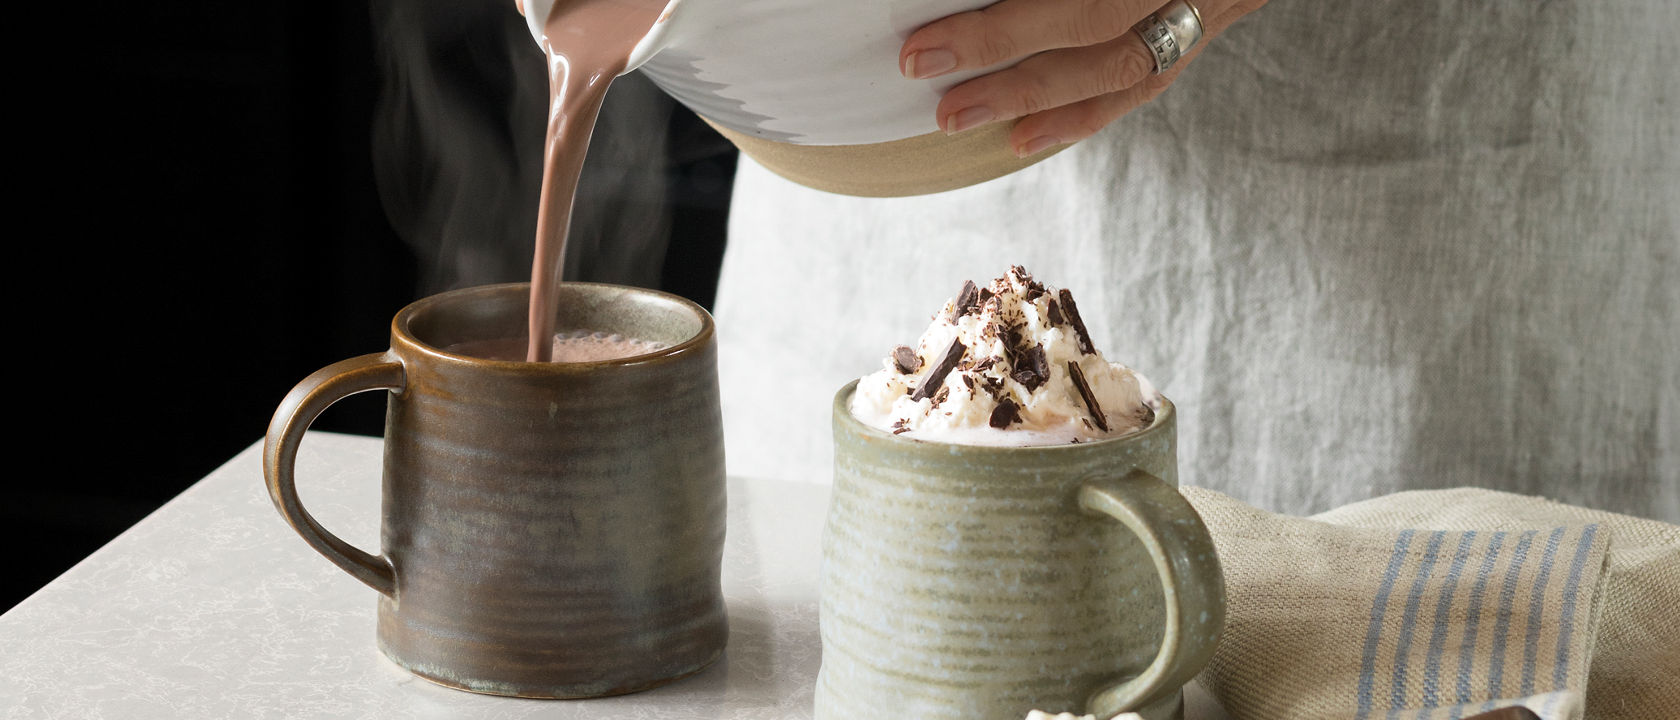 Hot chocolate being poured into a mug over a counter with a Cambria Big Sur Mist quartz countertop.